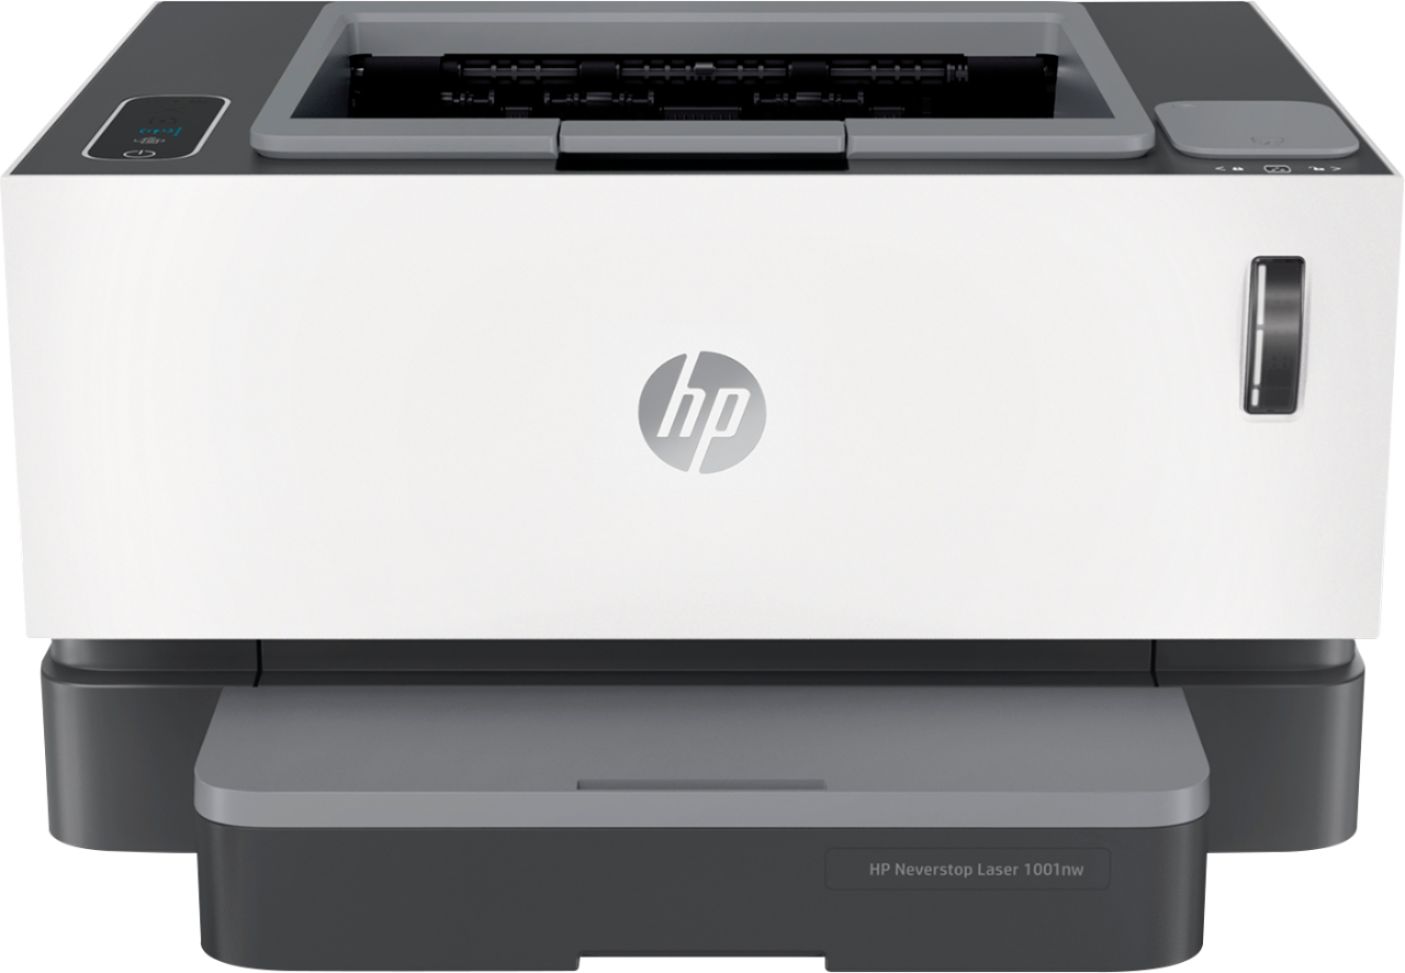 HP Neverstop 1001nw Wireless Black-And-White Laser Printer White 5HG80A#BGJ  - Best Buy